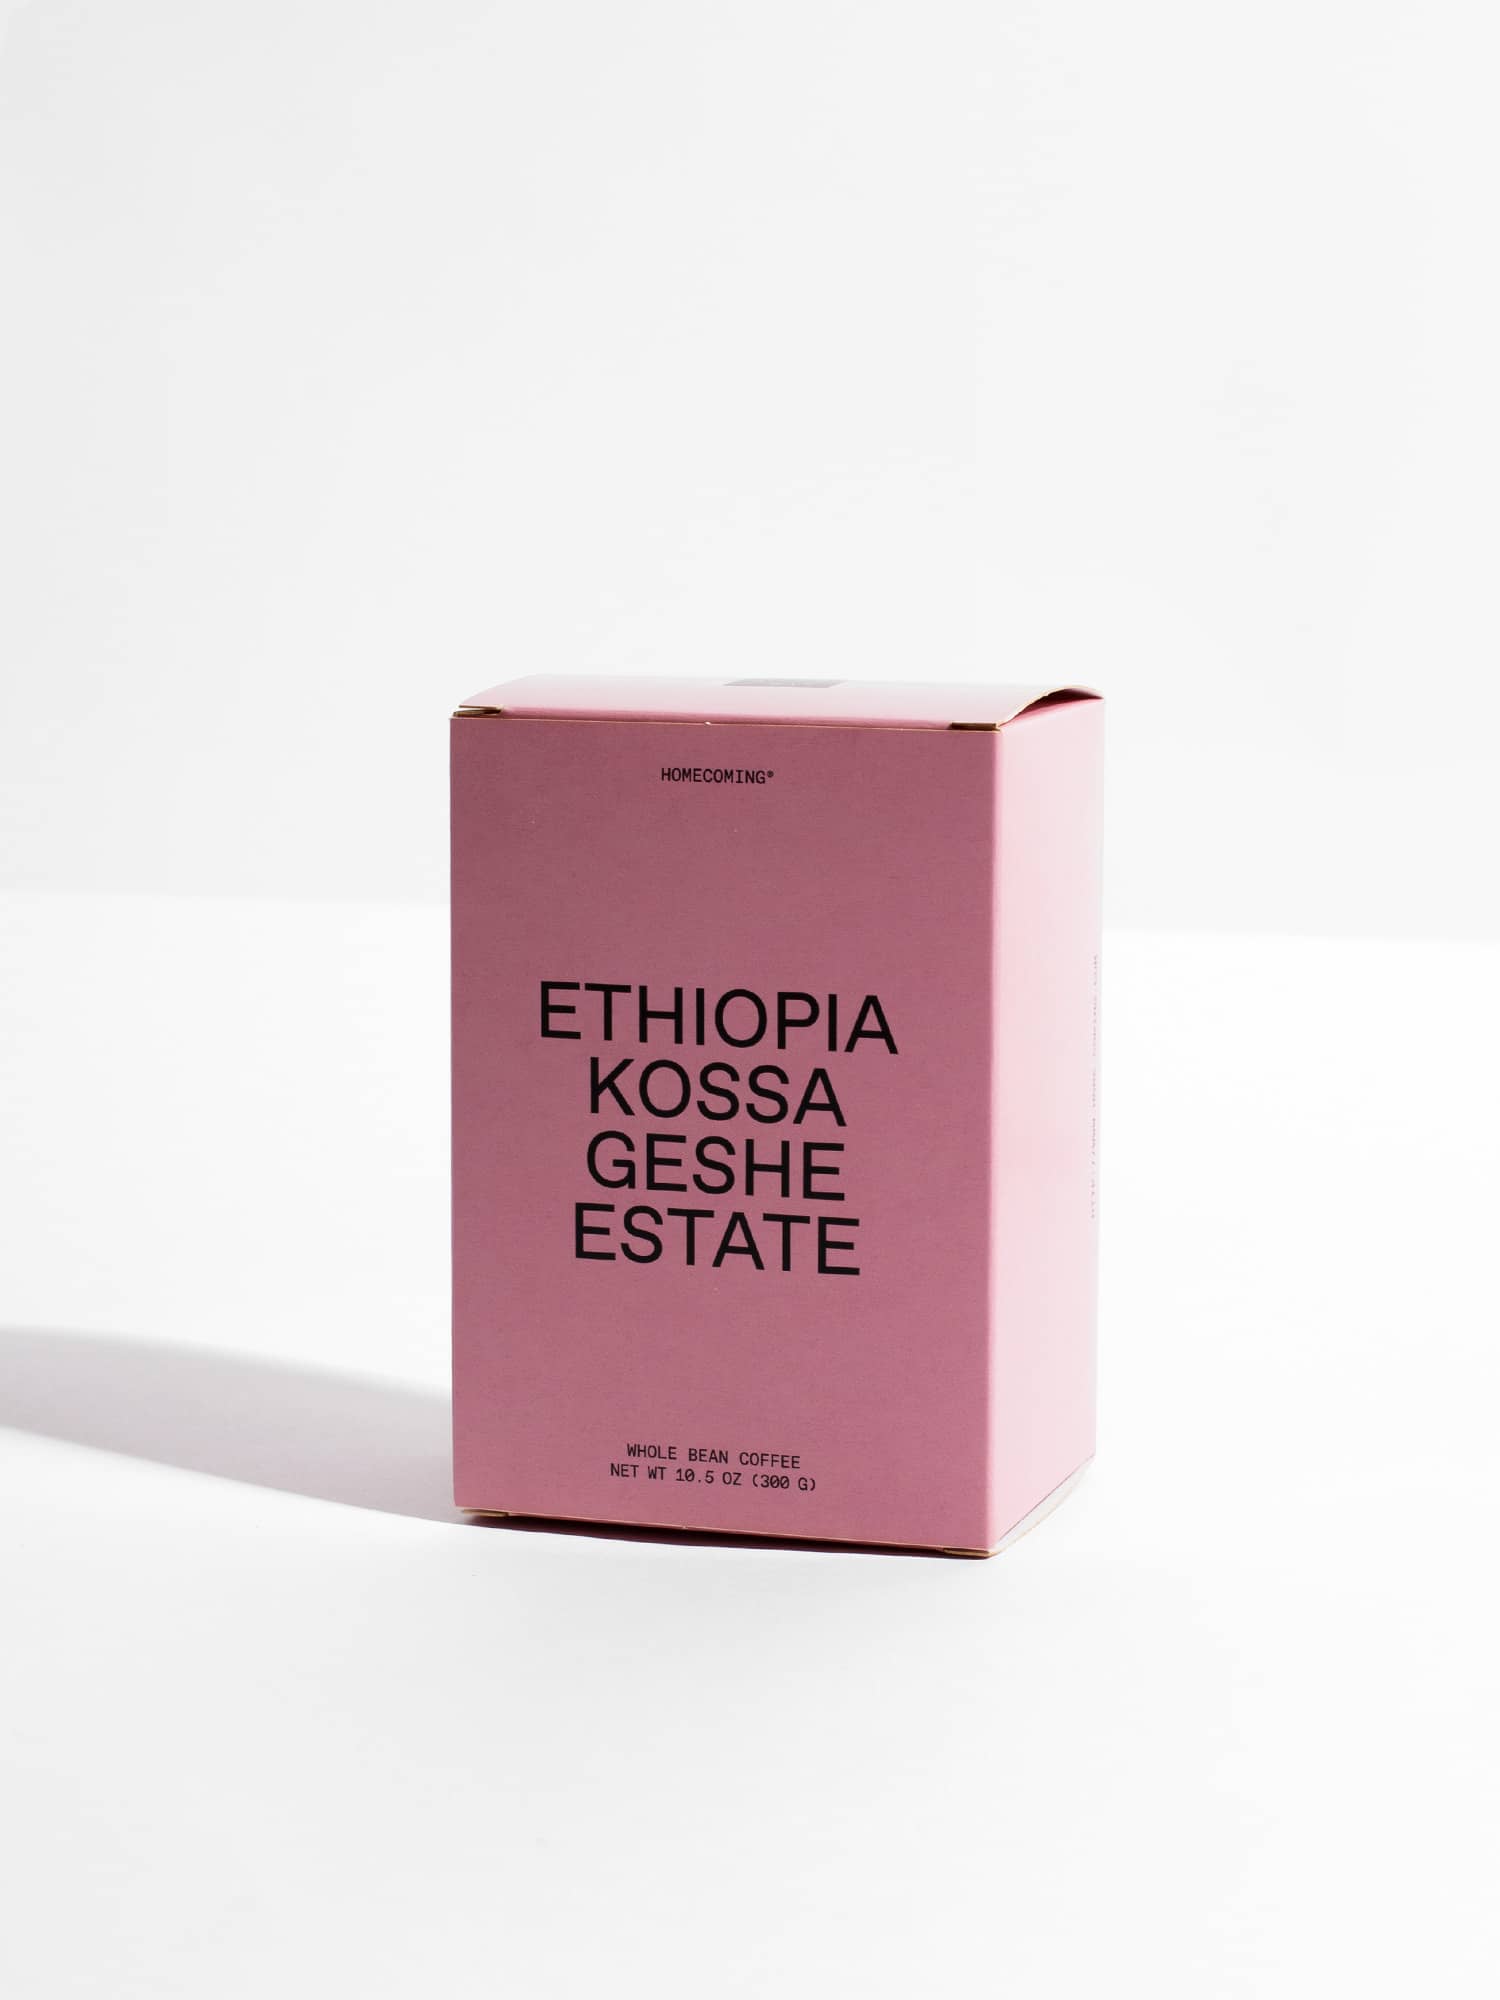 Ethiopia Kossa Geshe Estate